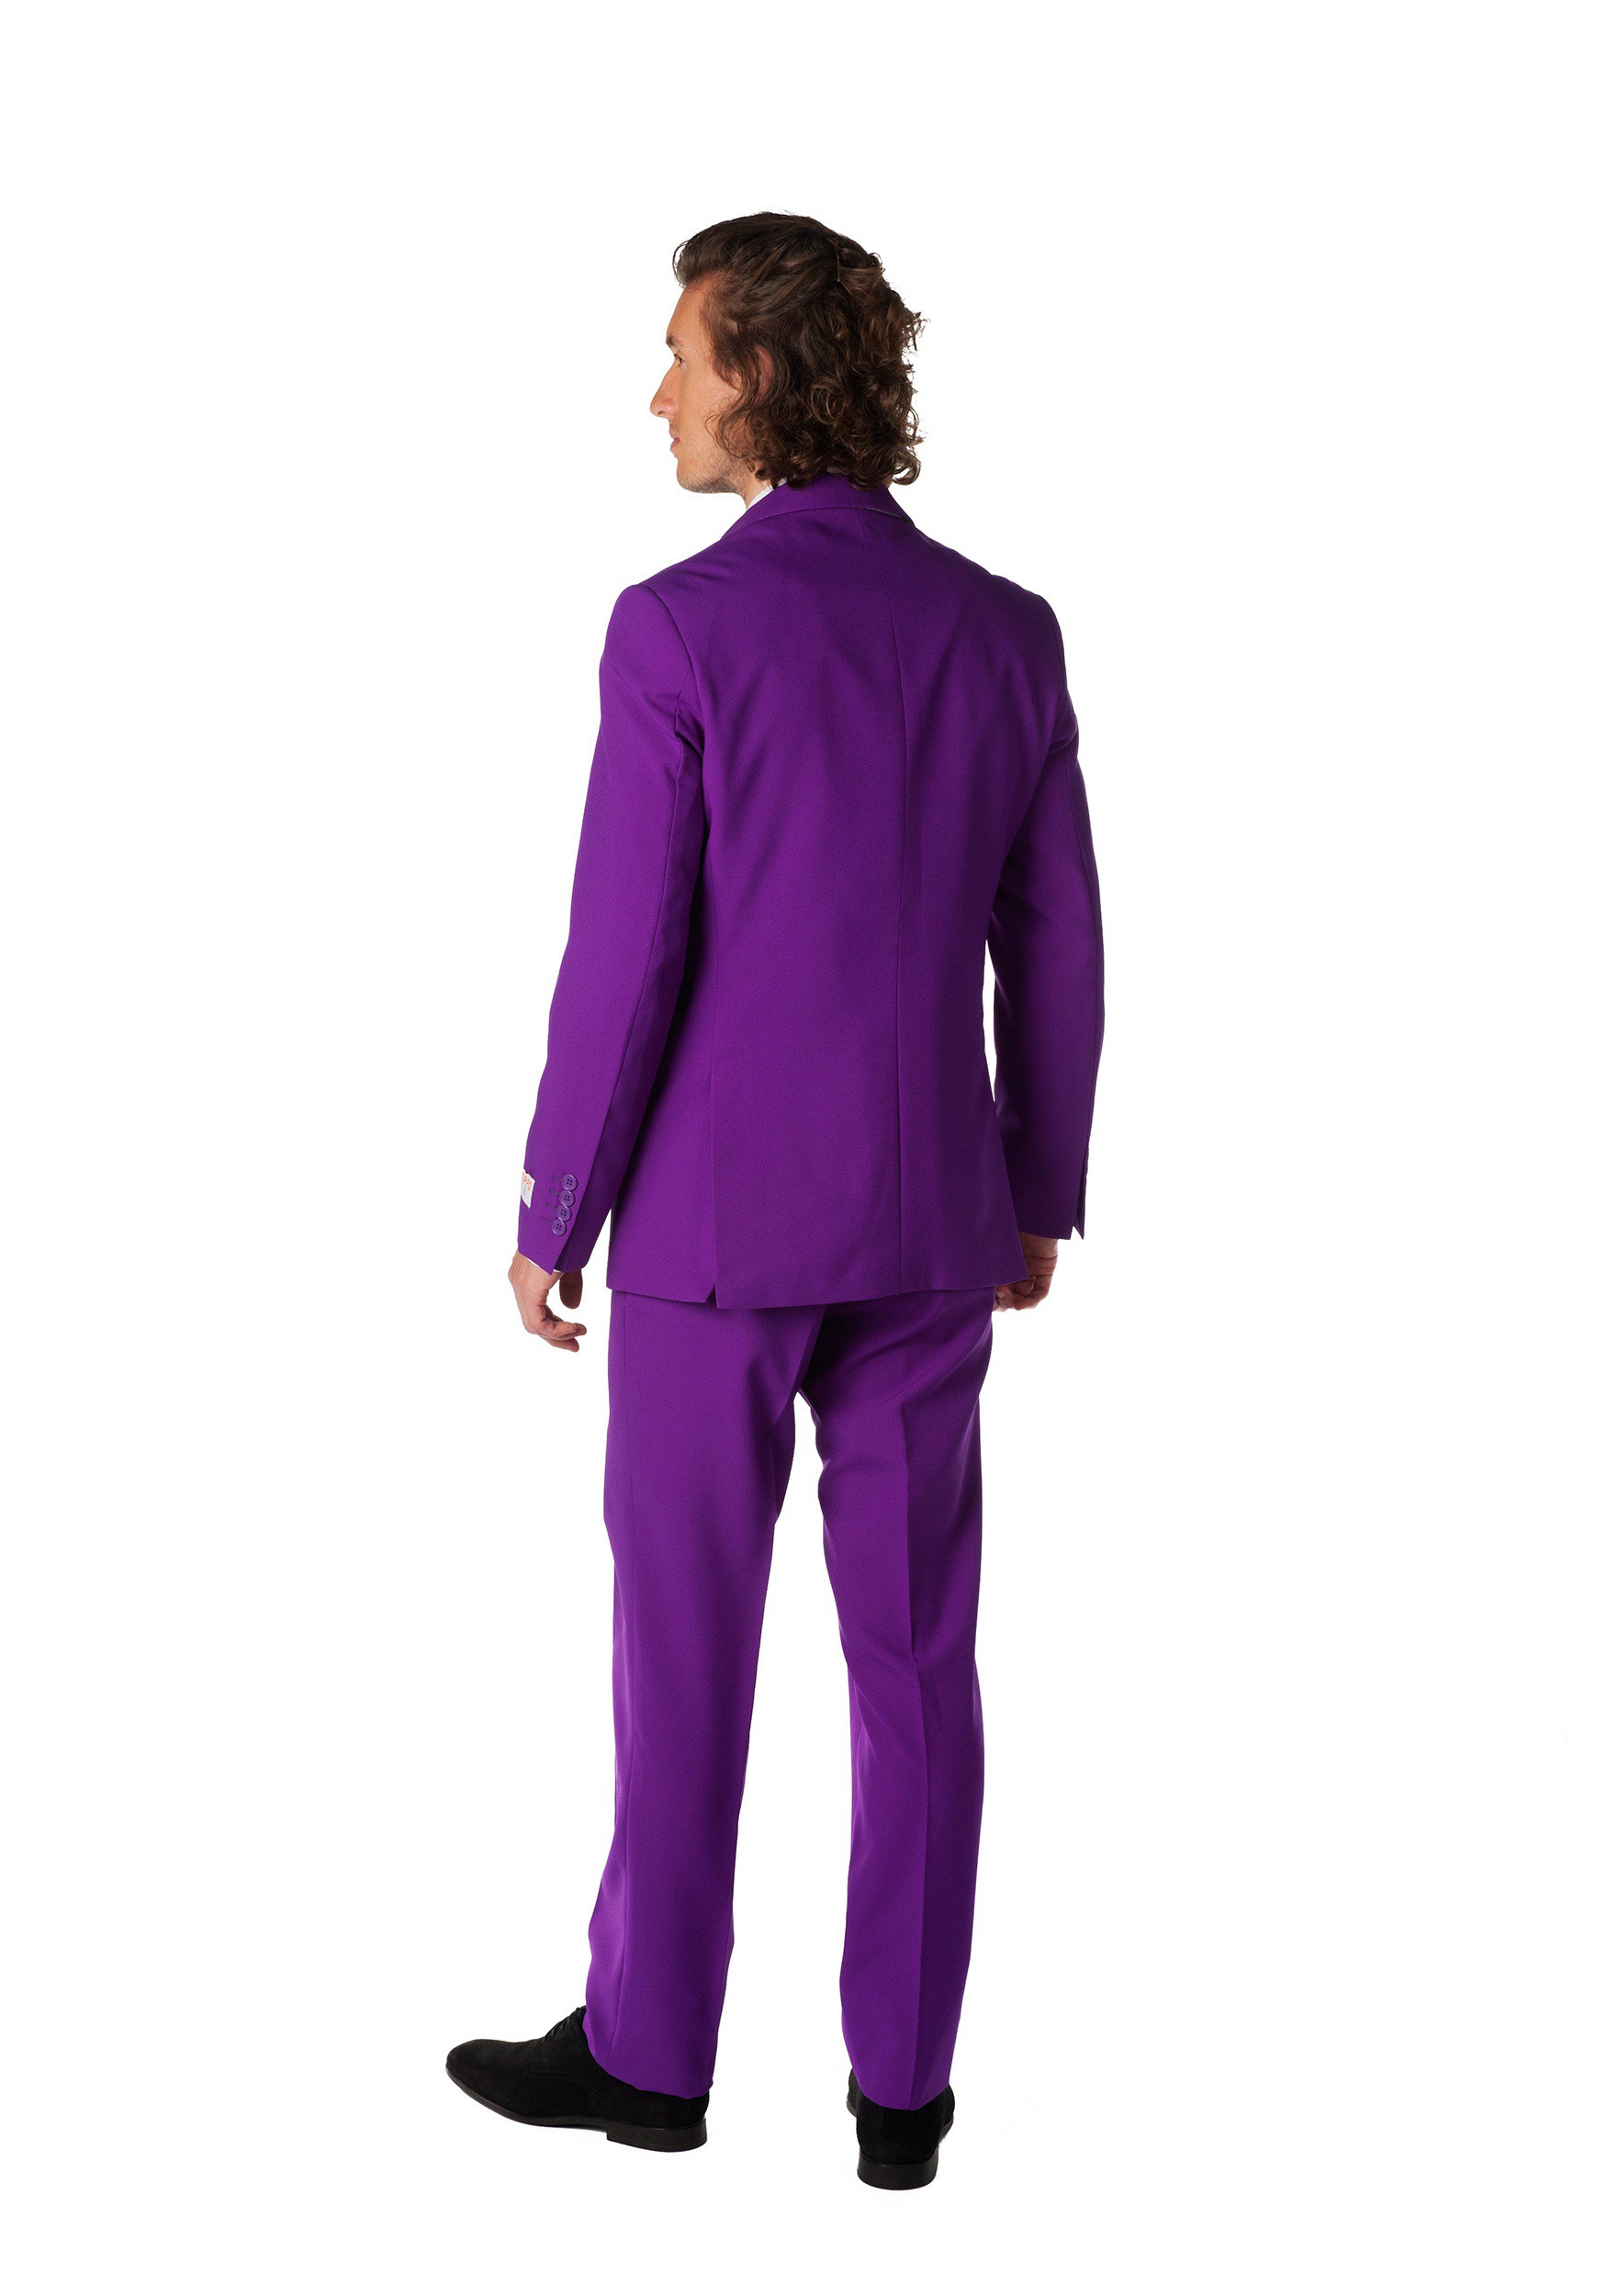 Men's OppoSuits Purple Suit